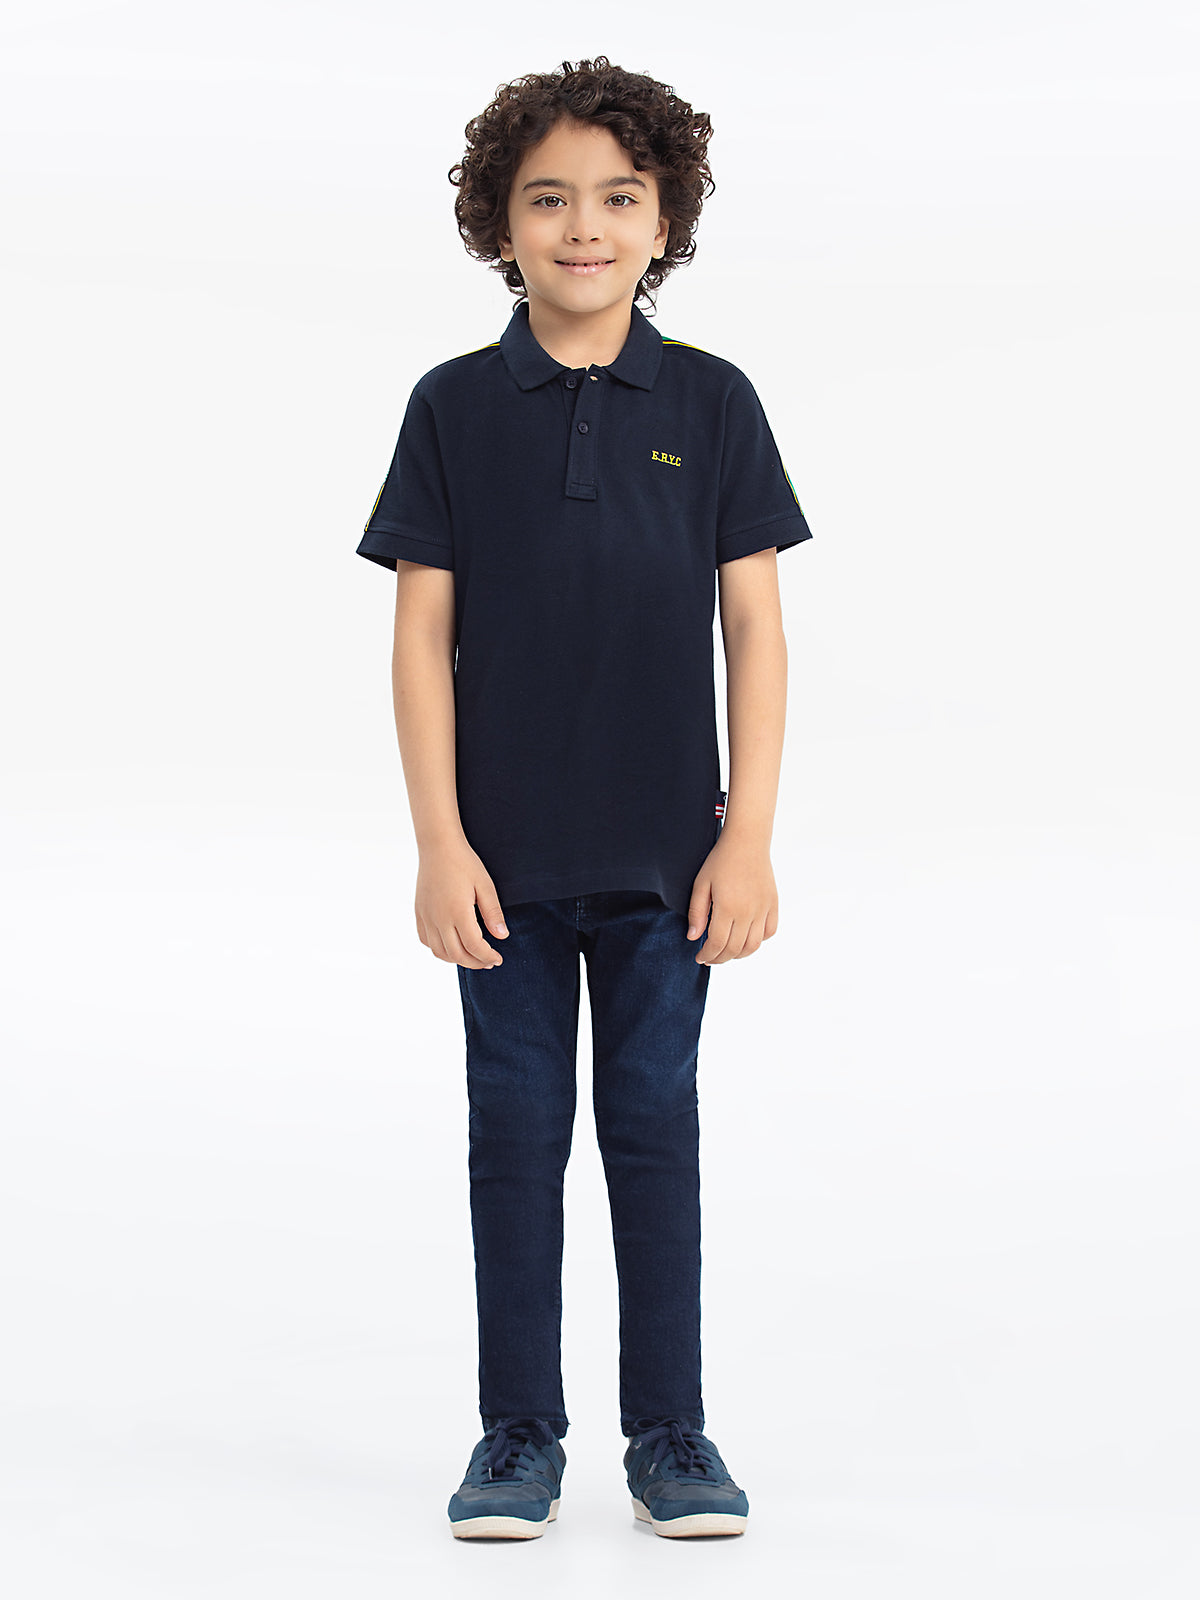 Boy's Dark Navy Polo Shirt - EBTPS24-009